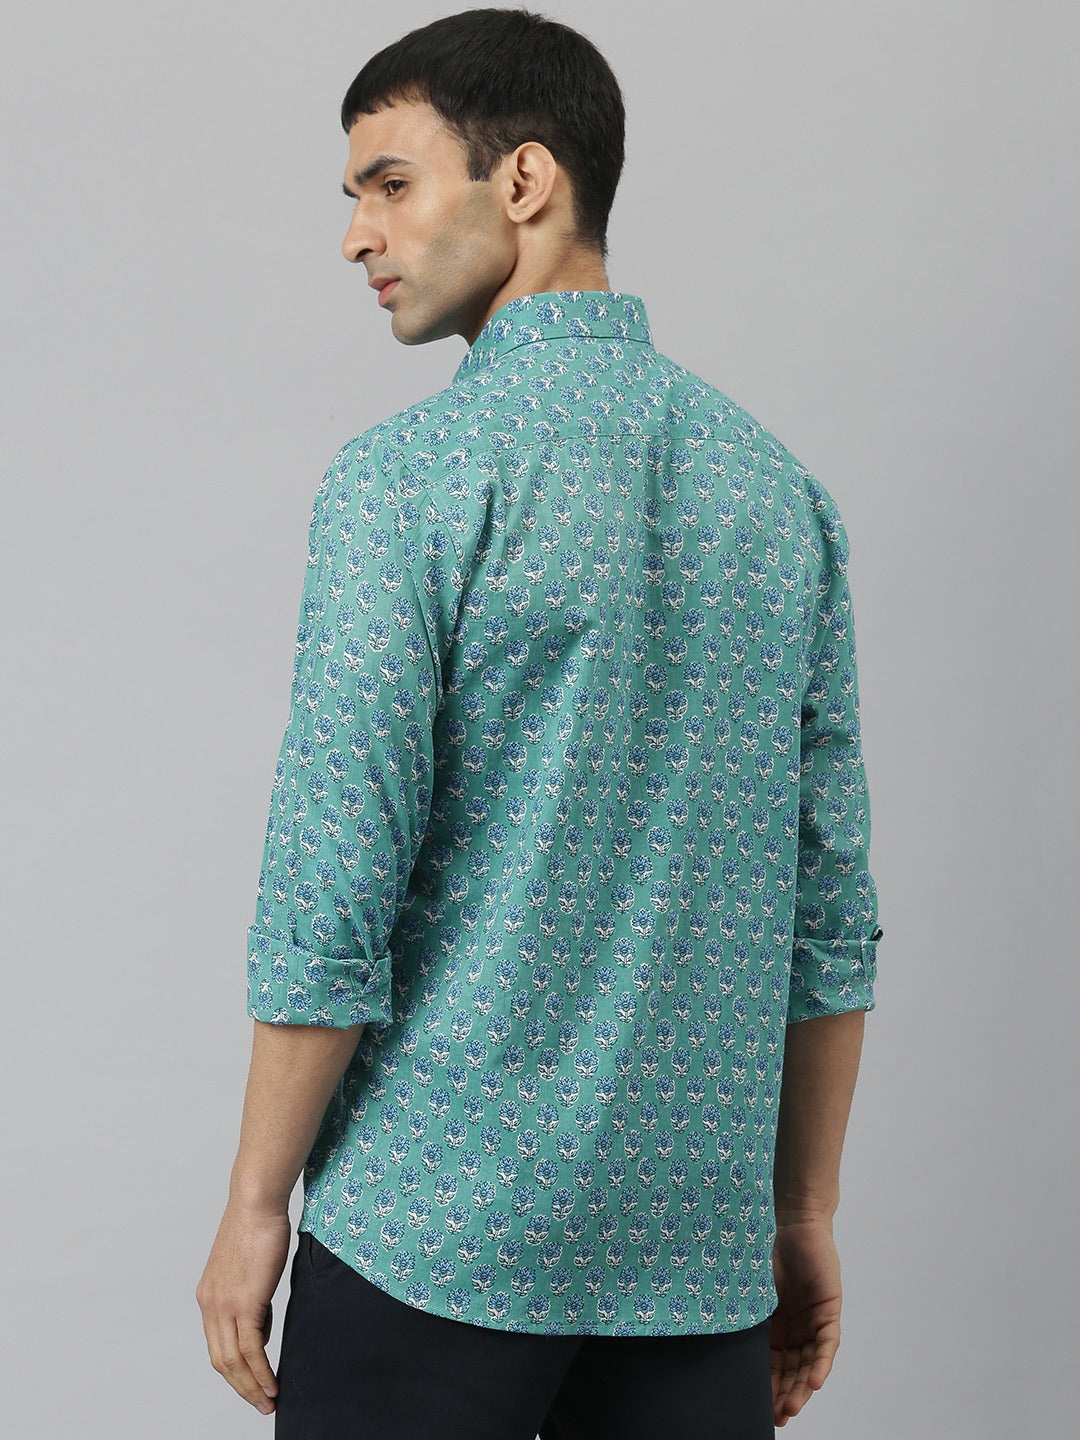 Millennial Men Turquoise Blue Comfort Printed Casual Shirt